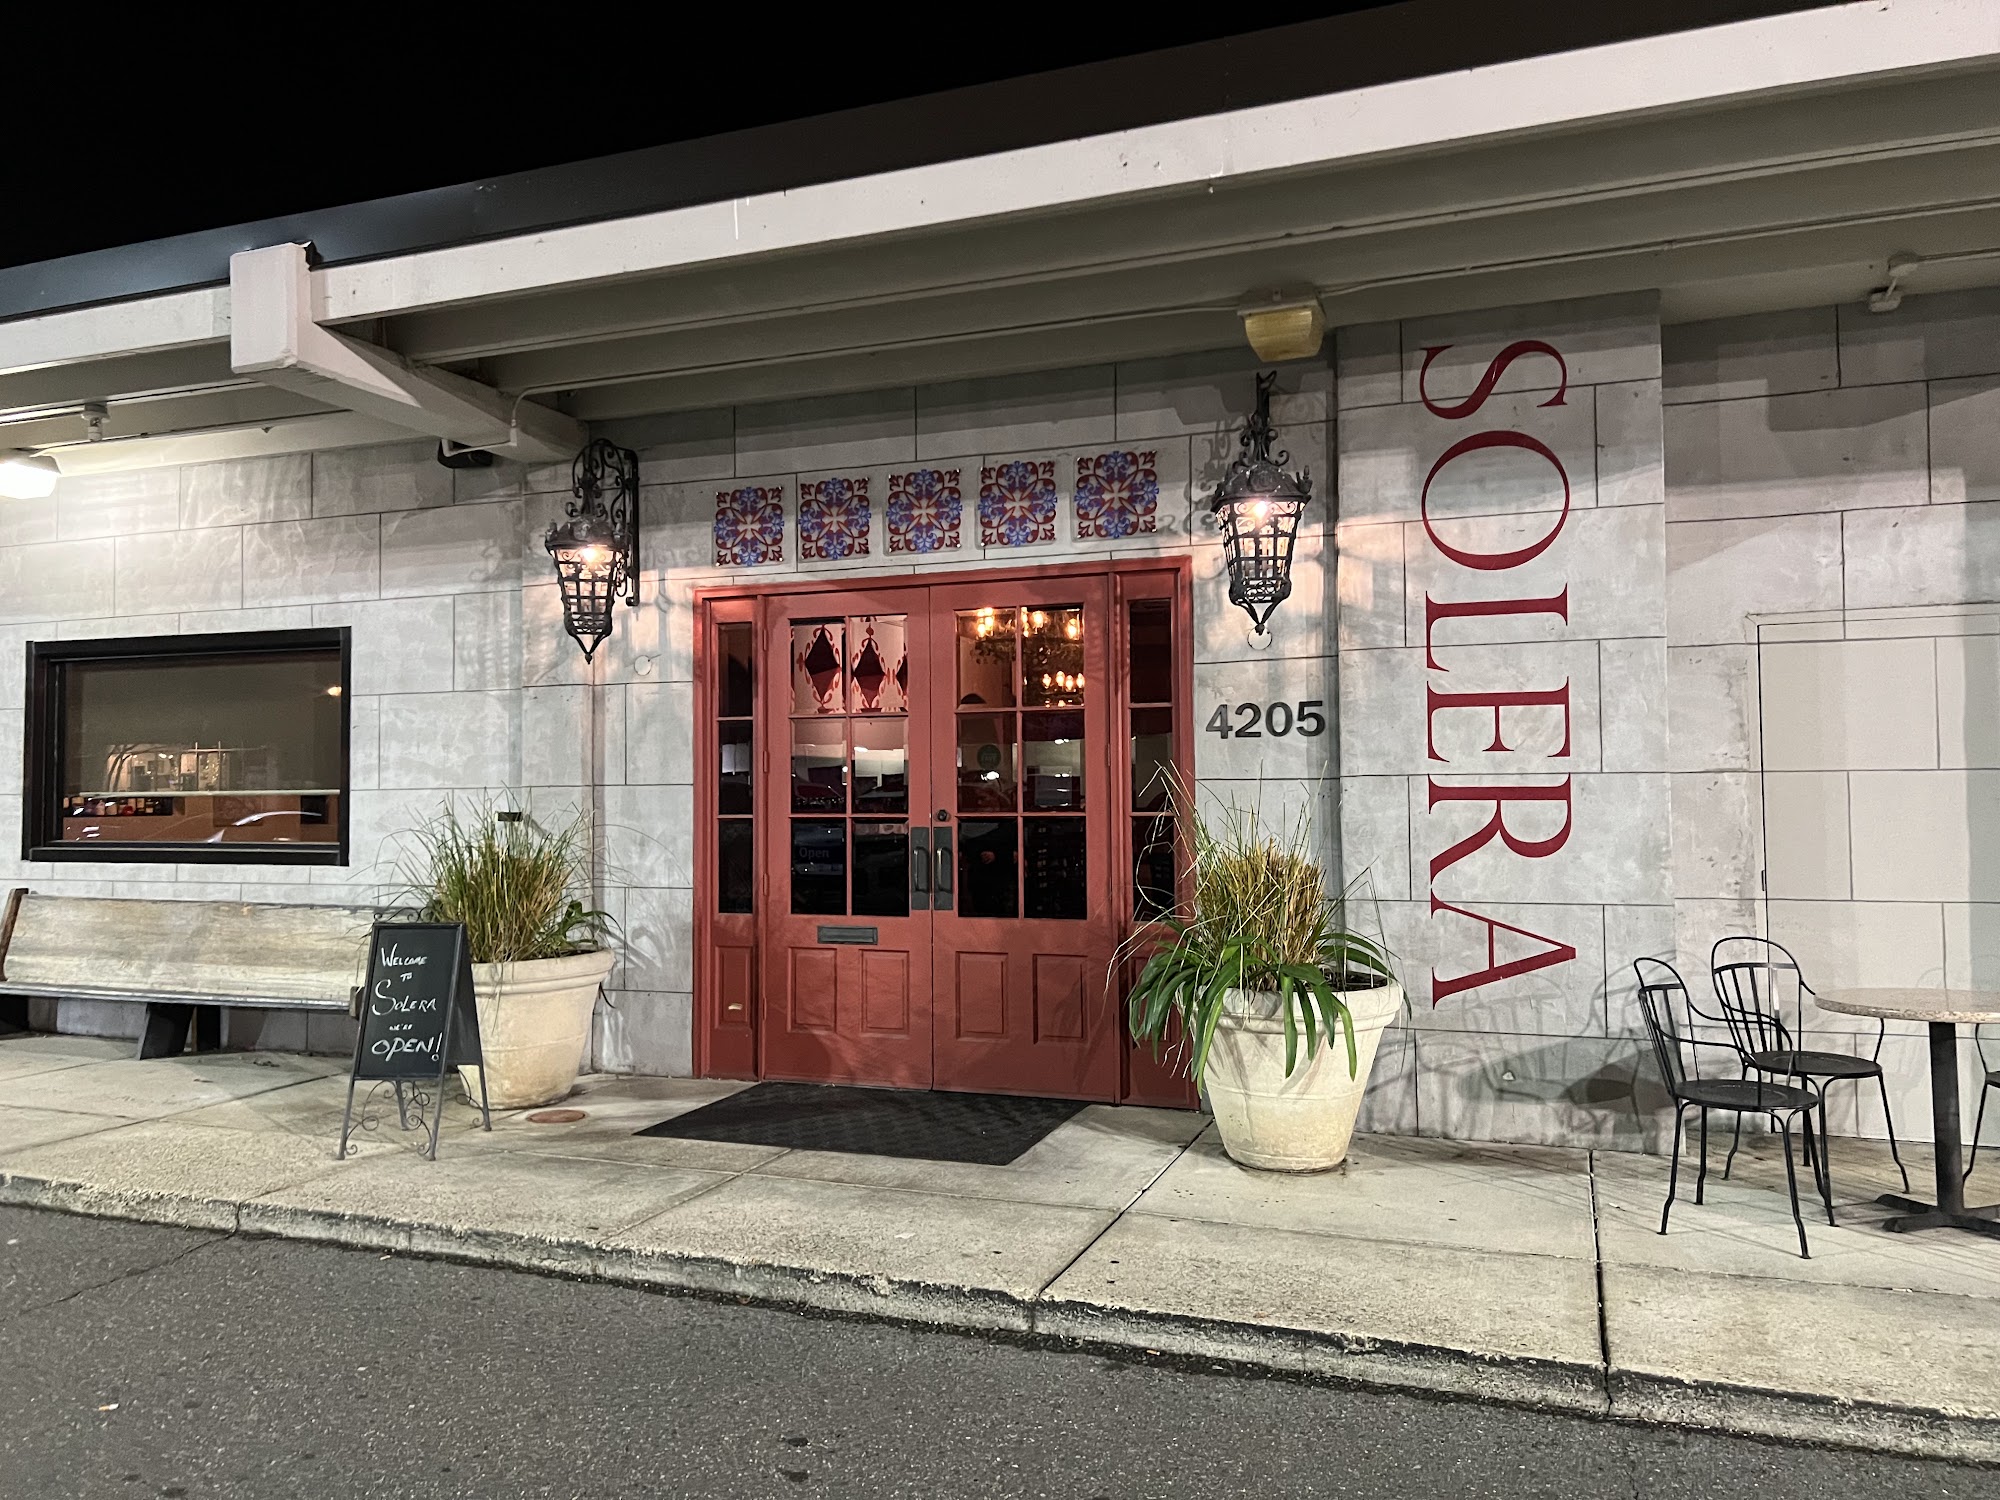 Solera - Spanish Tapas Restaurant and Bar